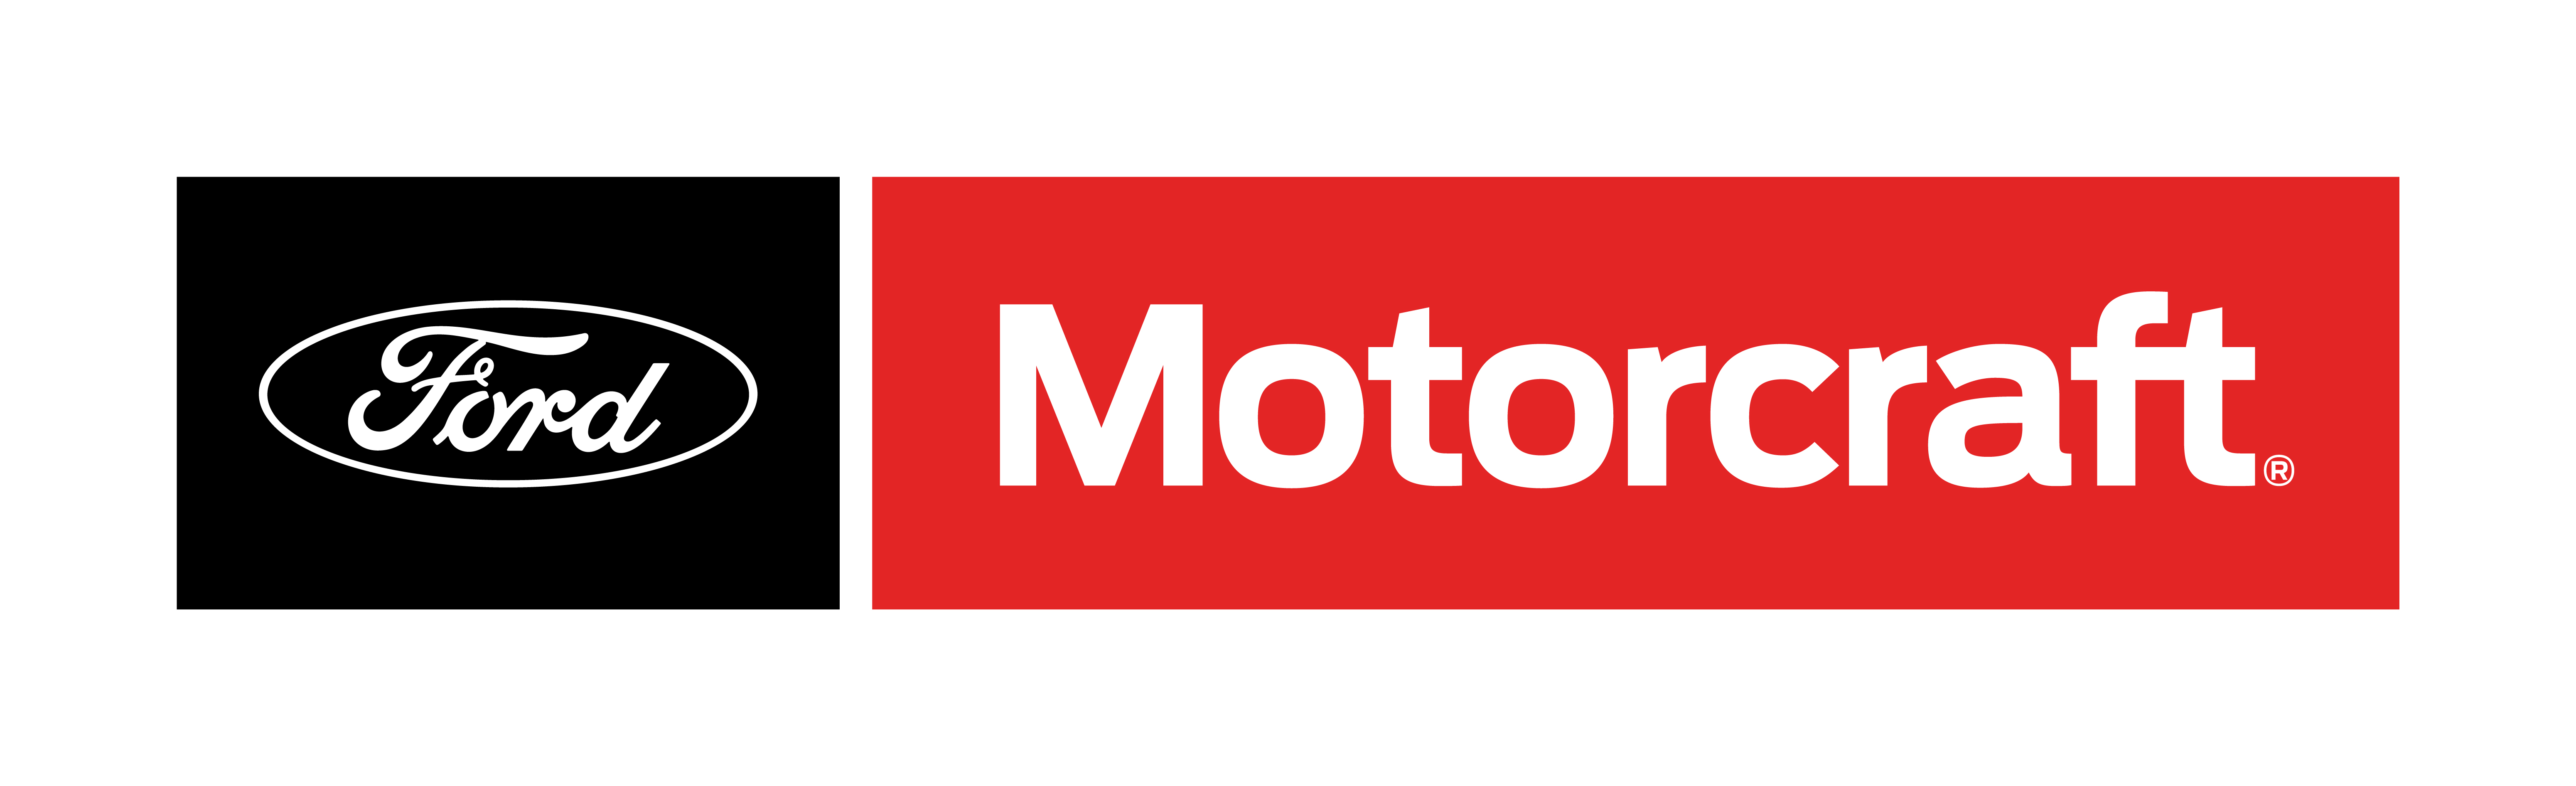 Ford Motorcraft Logo